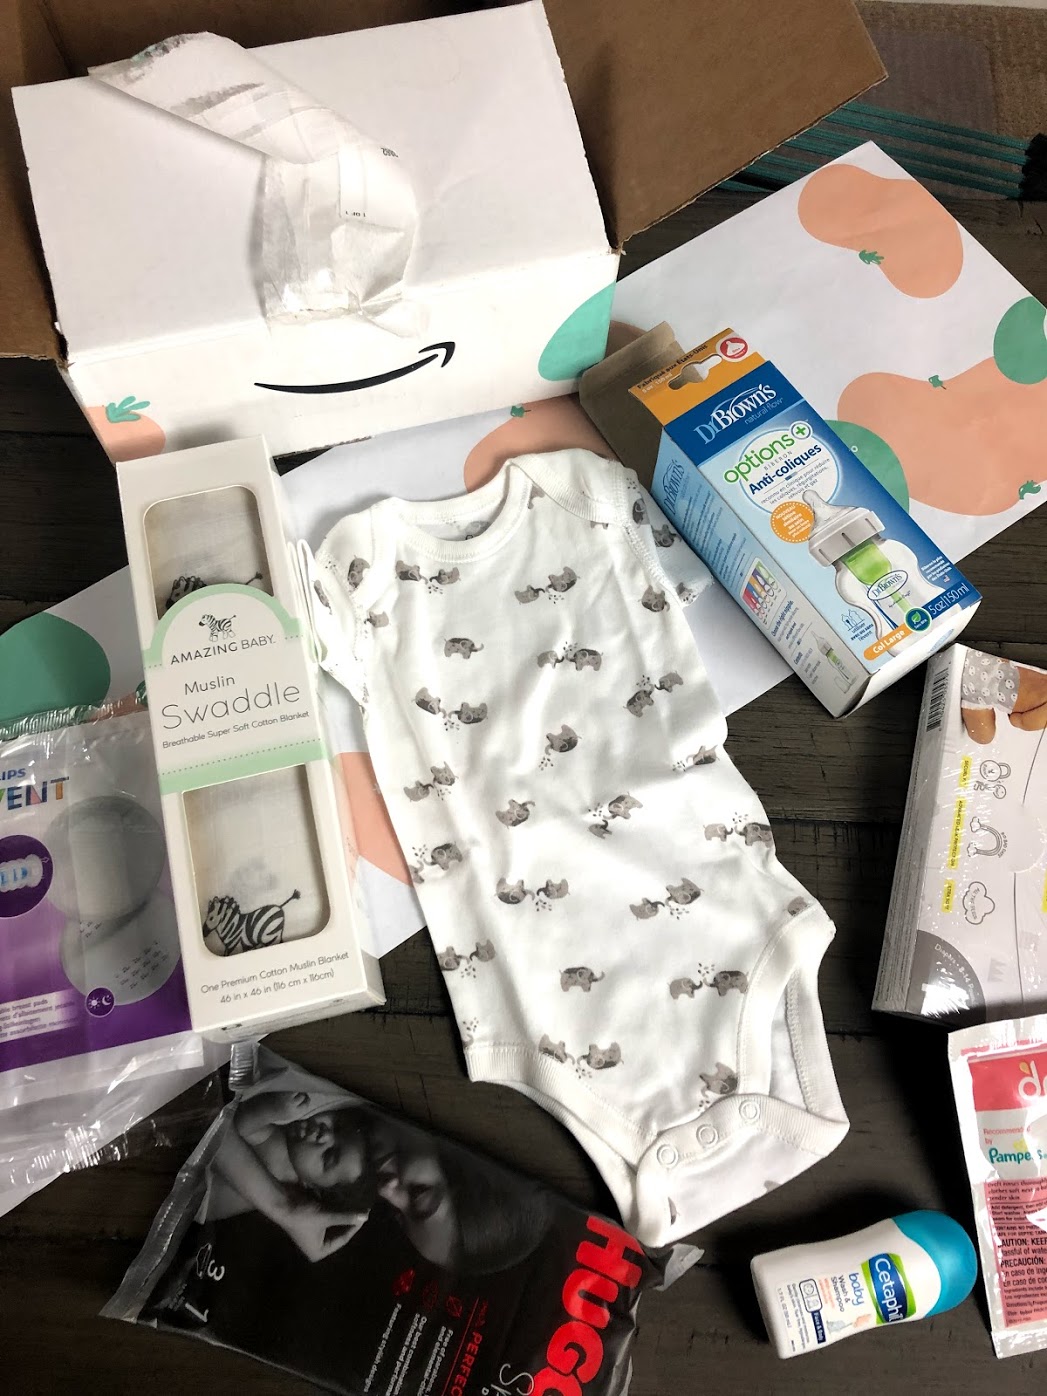 amazon welcome box baby registry